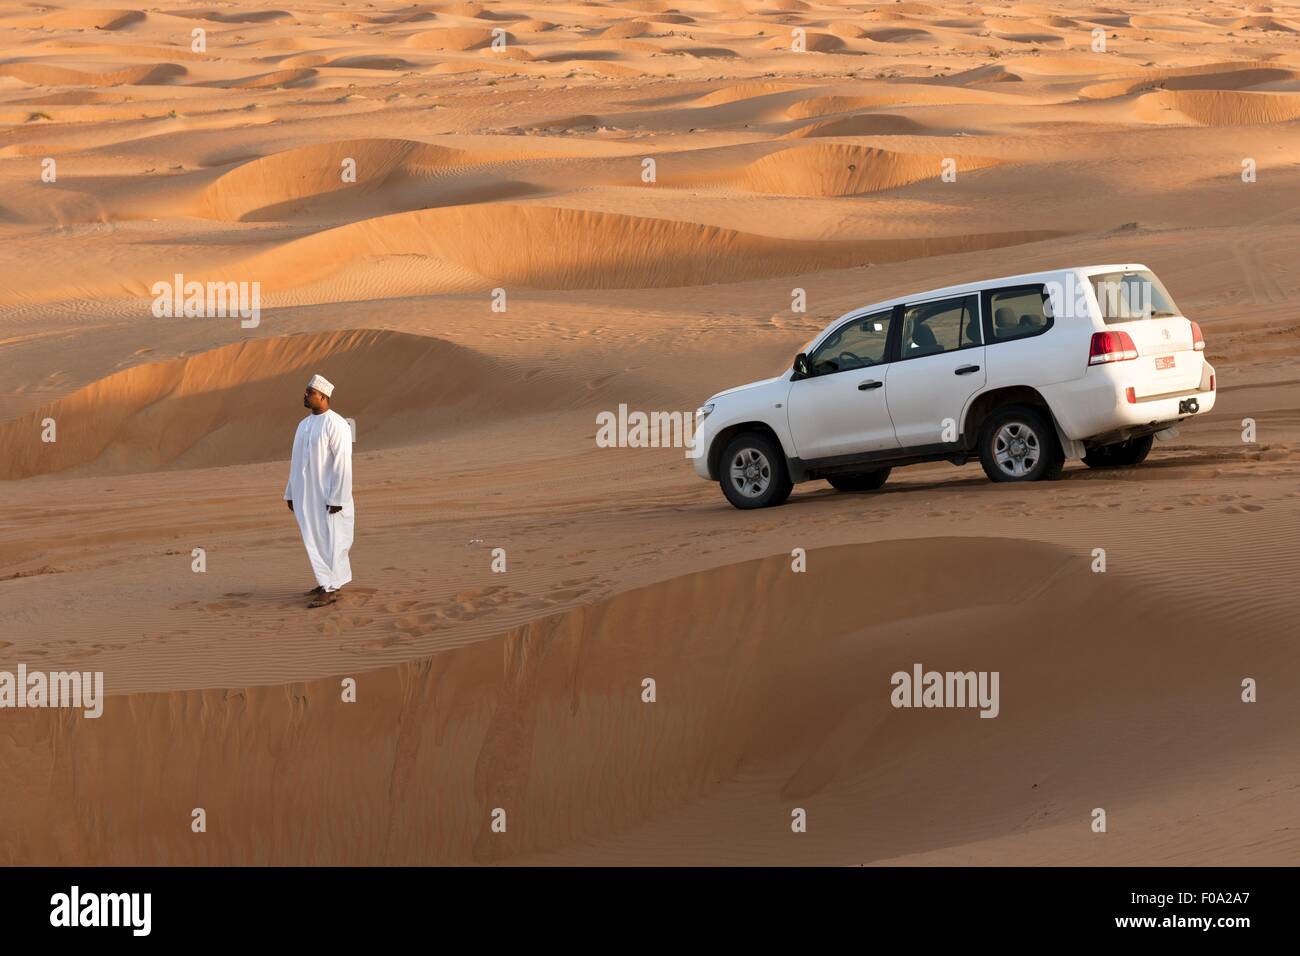 Man wearing white dishdasha standing in front of SUVs in Wahiba sands, Oman Stock Photo